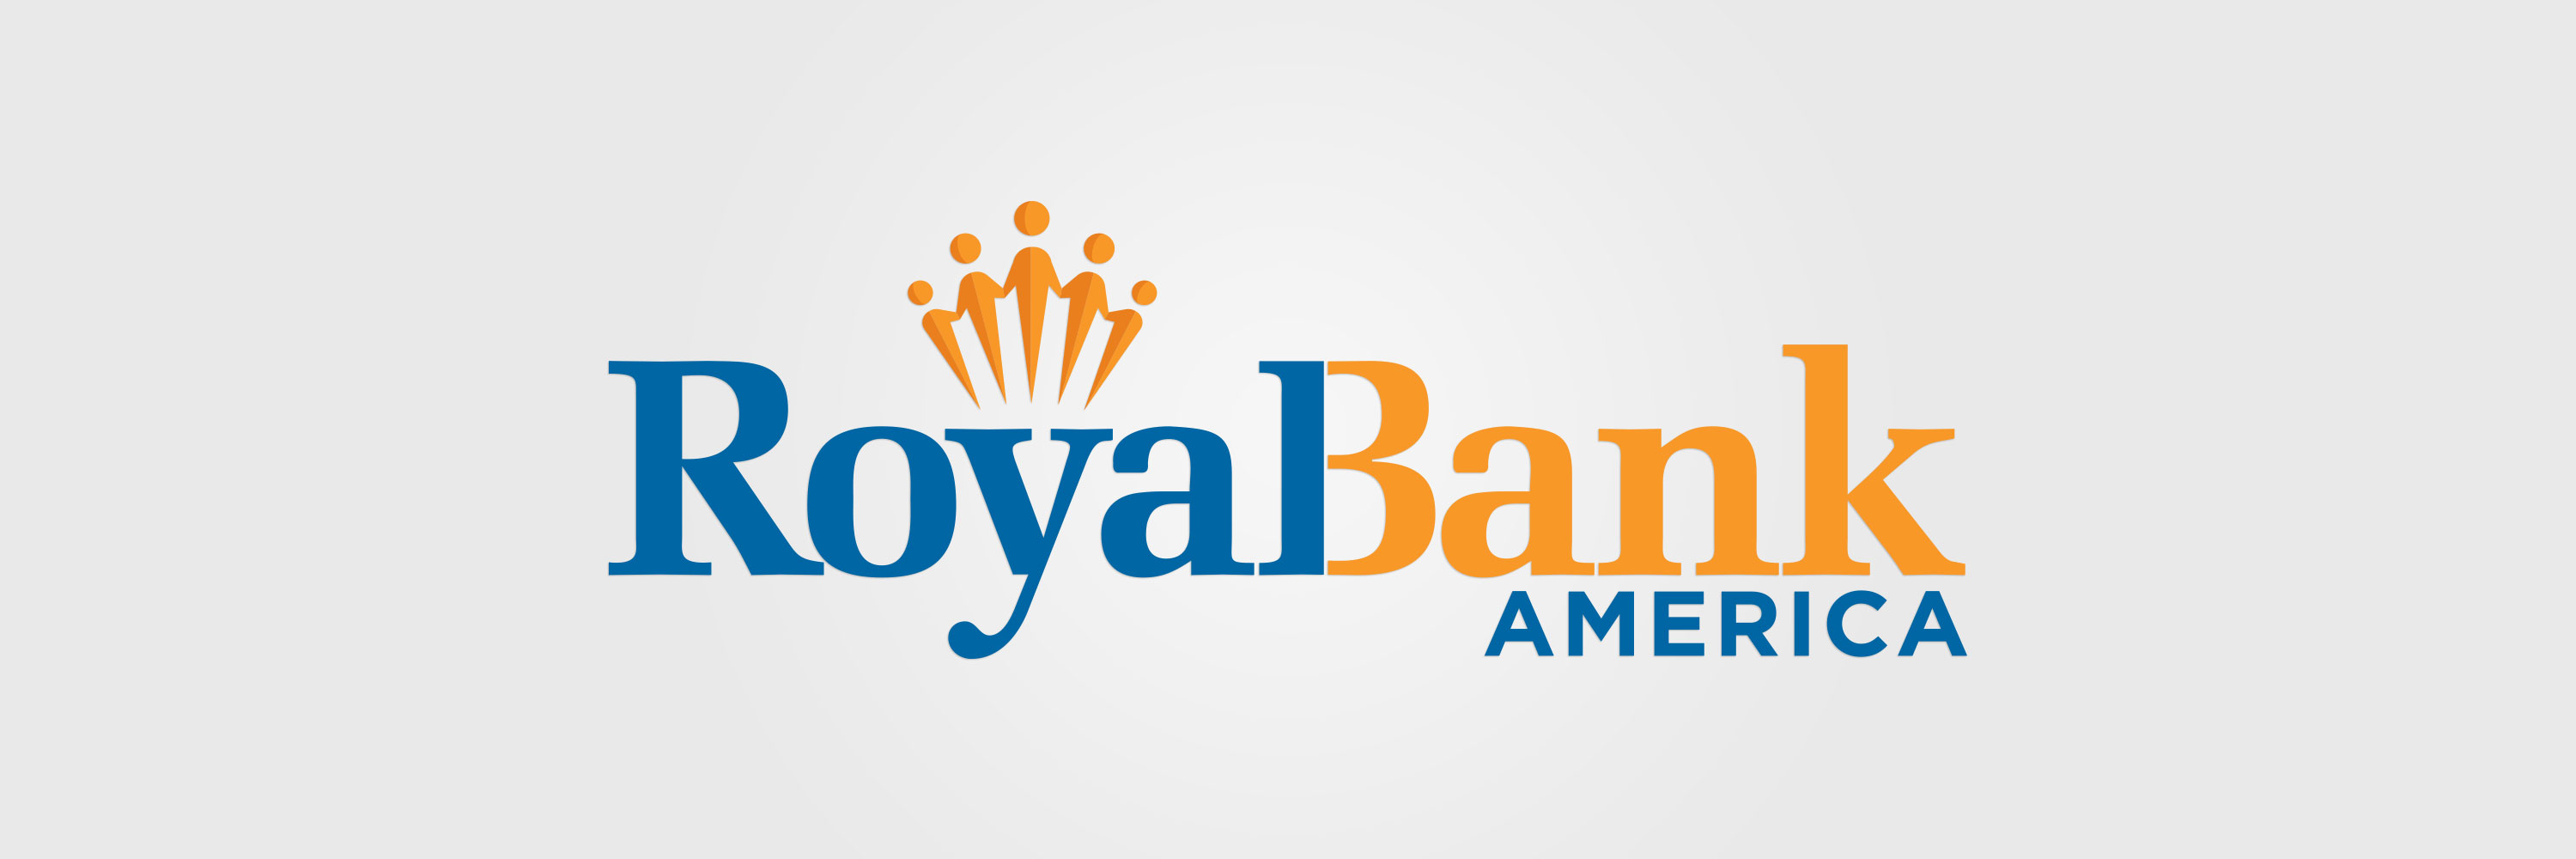 Royal Bank America Financial Institution Rebrand - Virtual ...